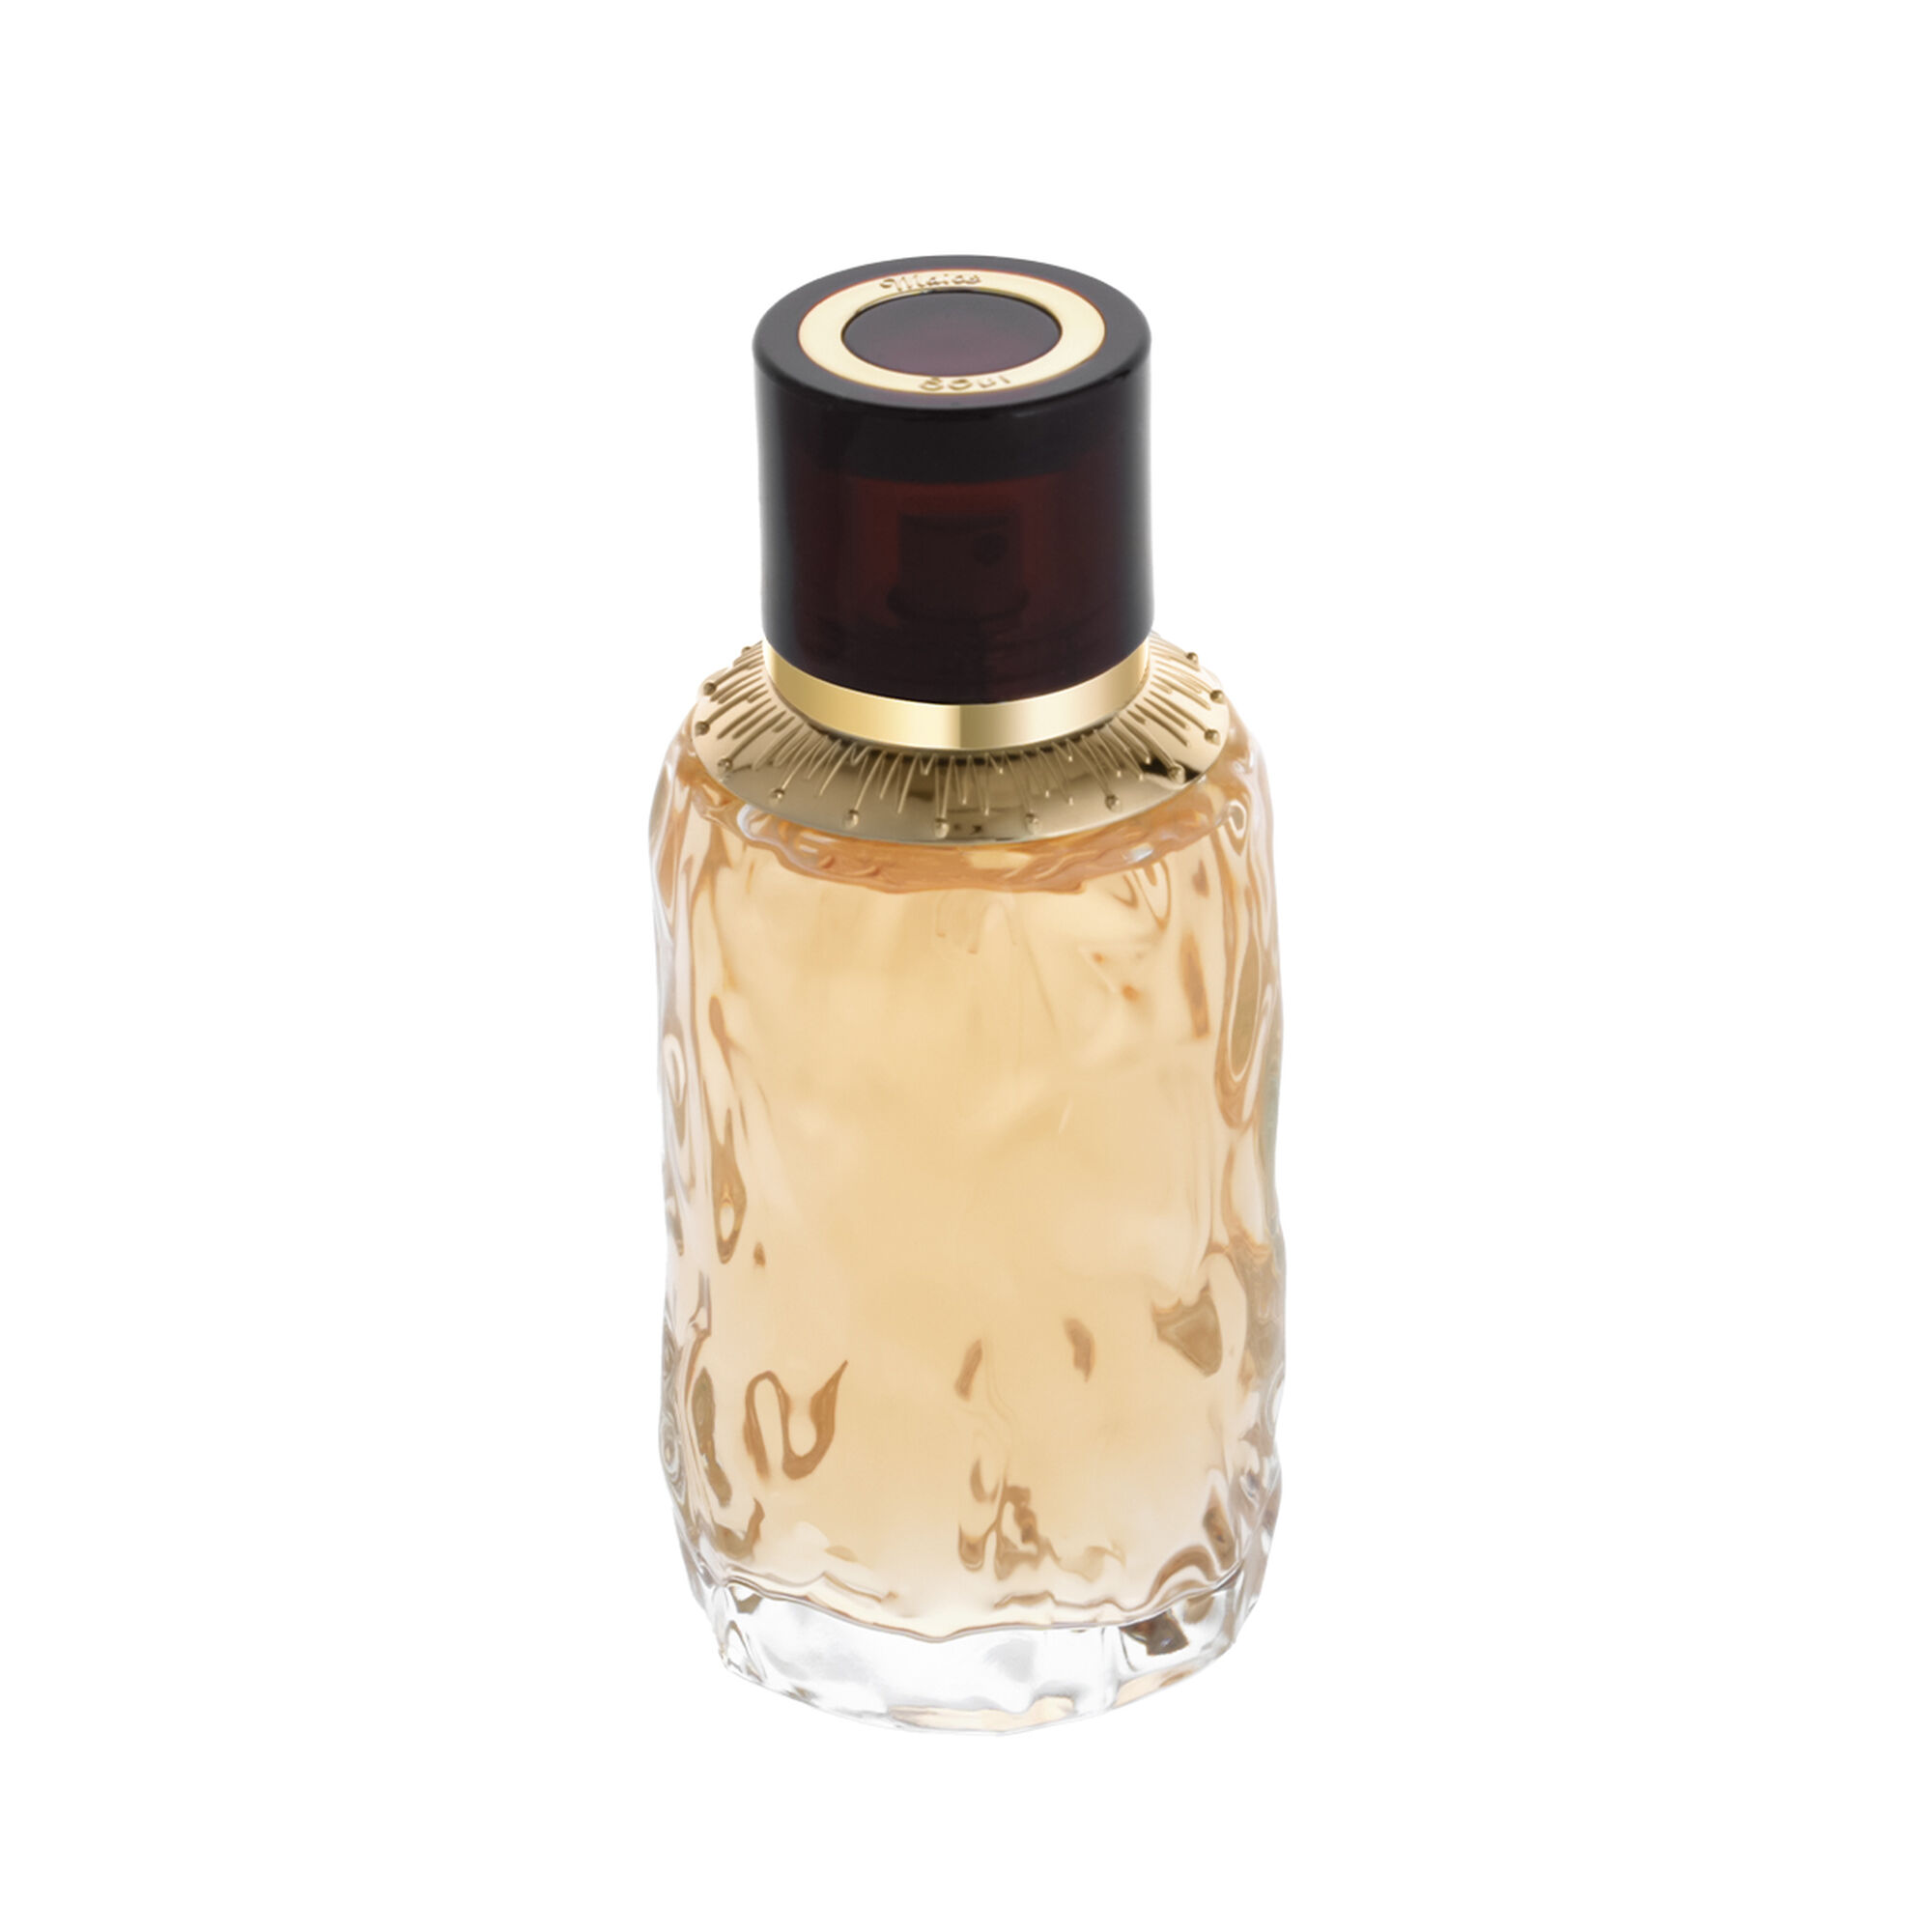 Soul Perfume by Maios 100ml 200 ml